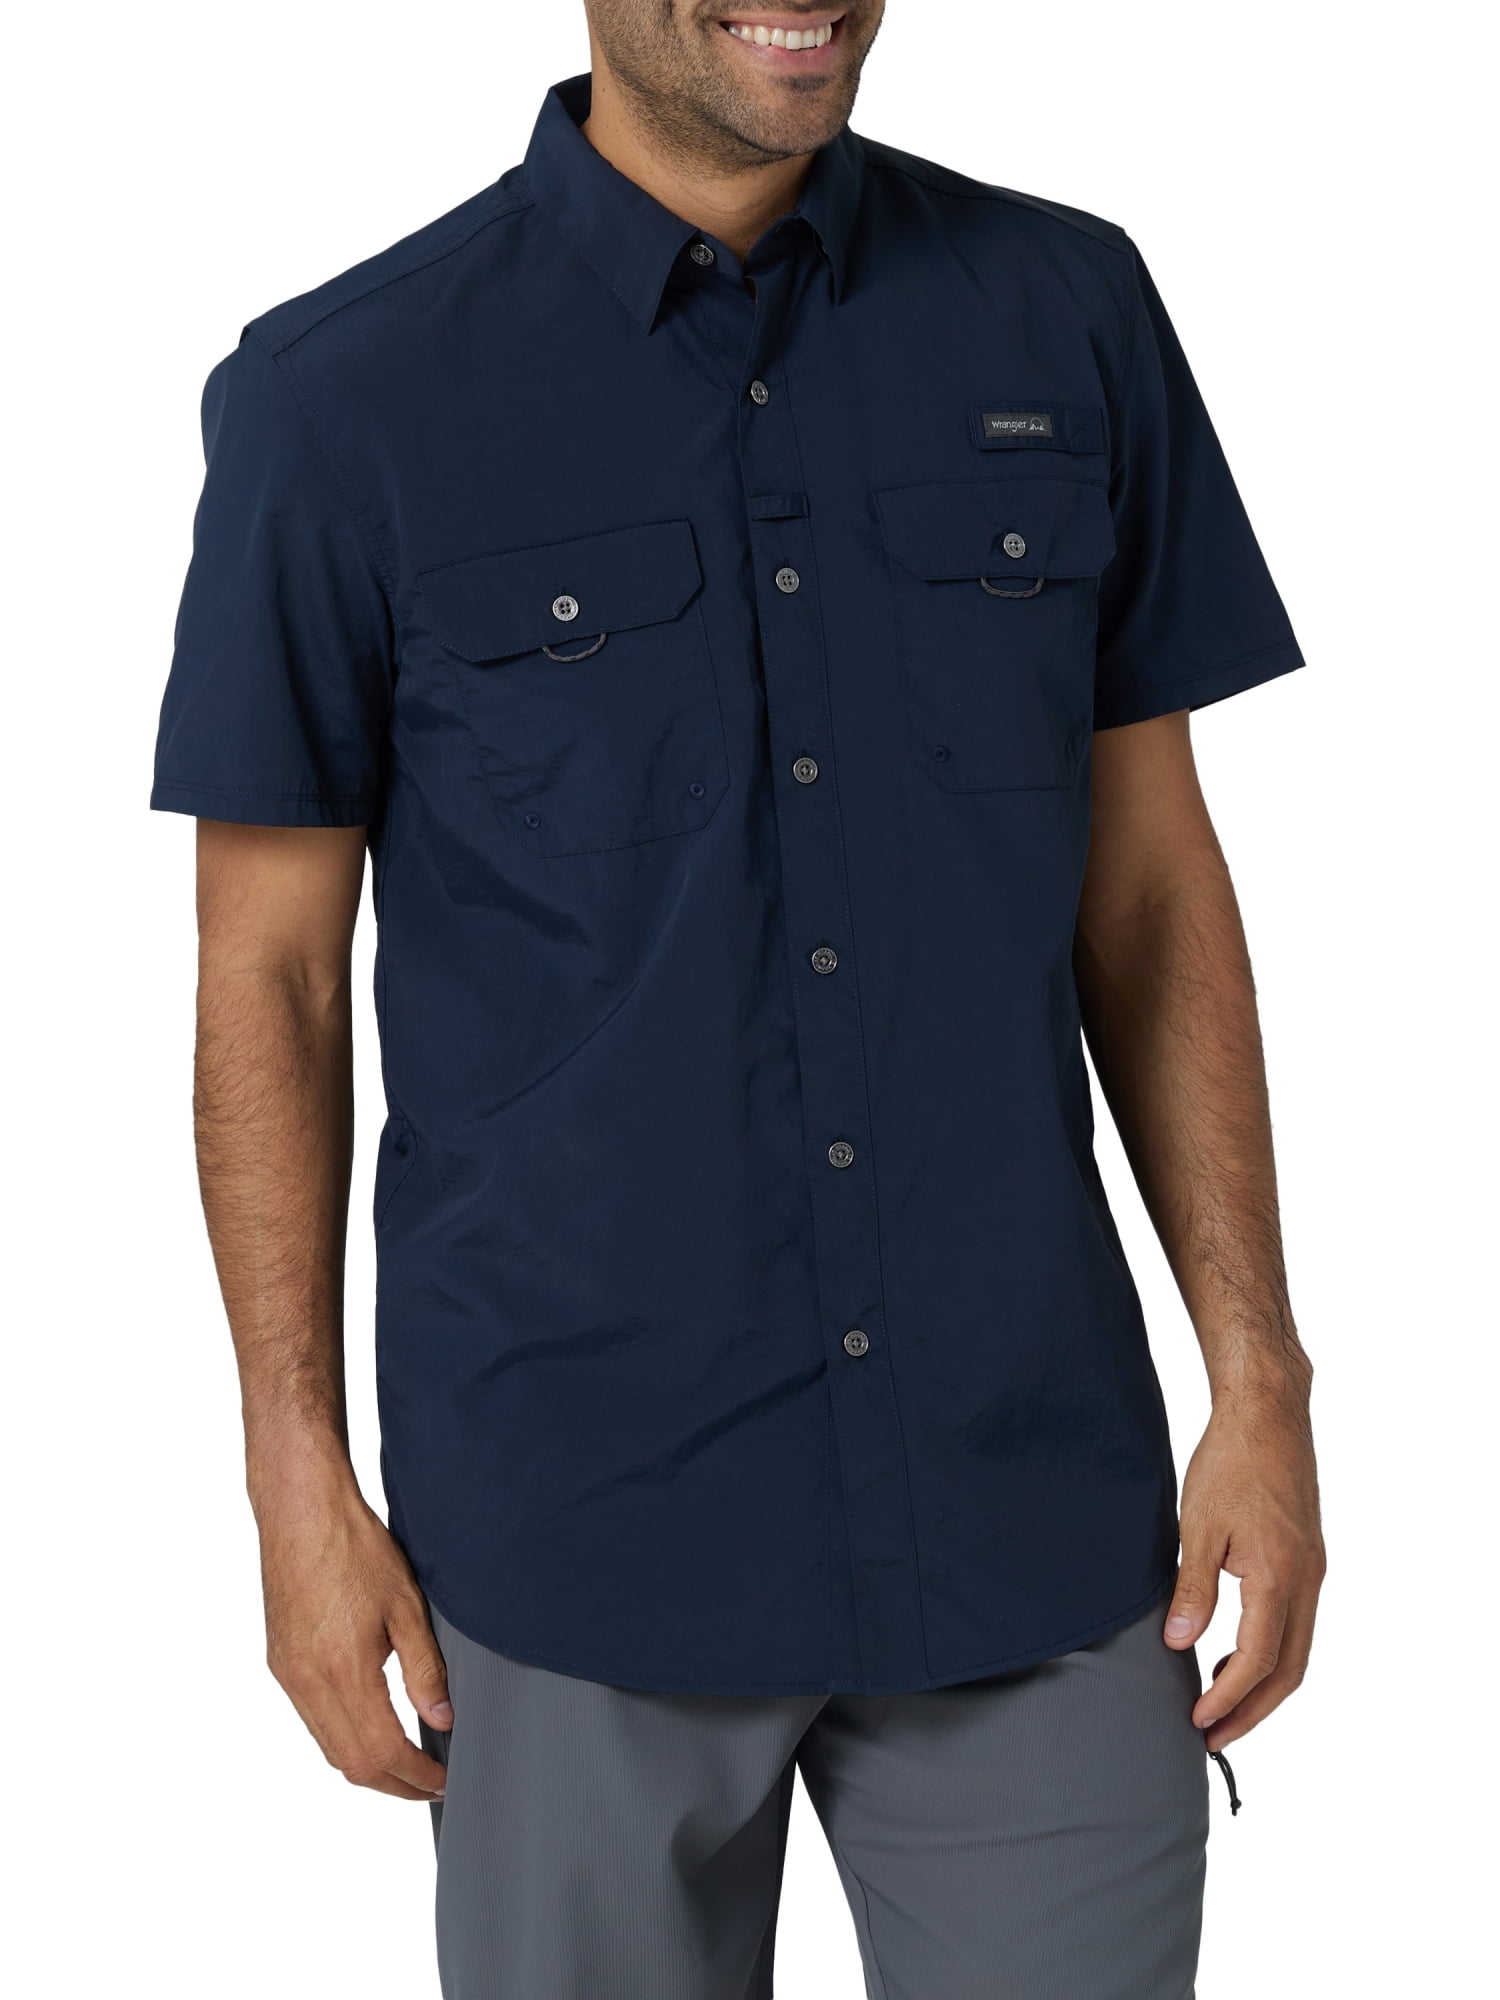 Wrangler Men's Outdoor Short Sleeve Fishing Shirt with UPF 30+